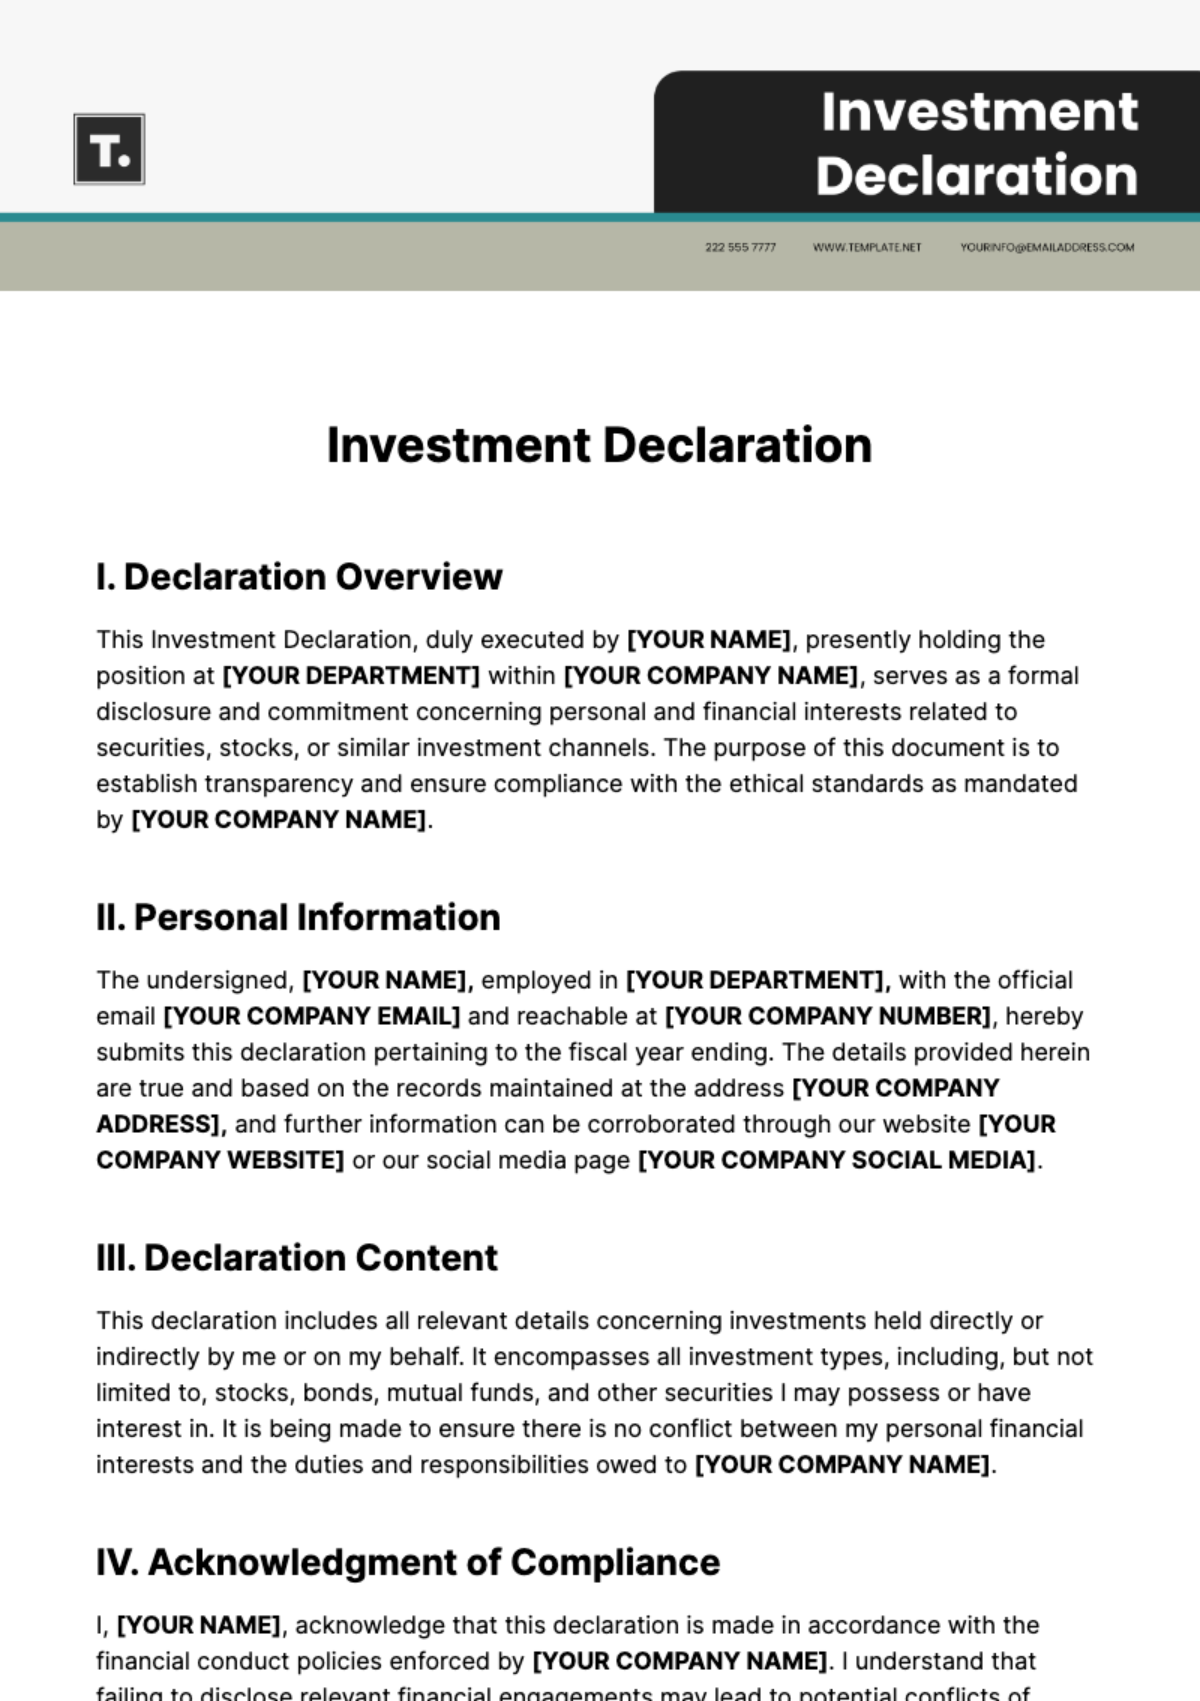 Investment Declaration Template